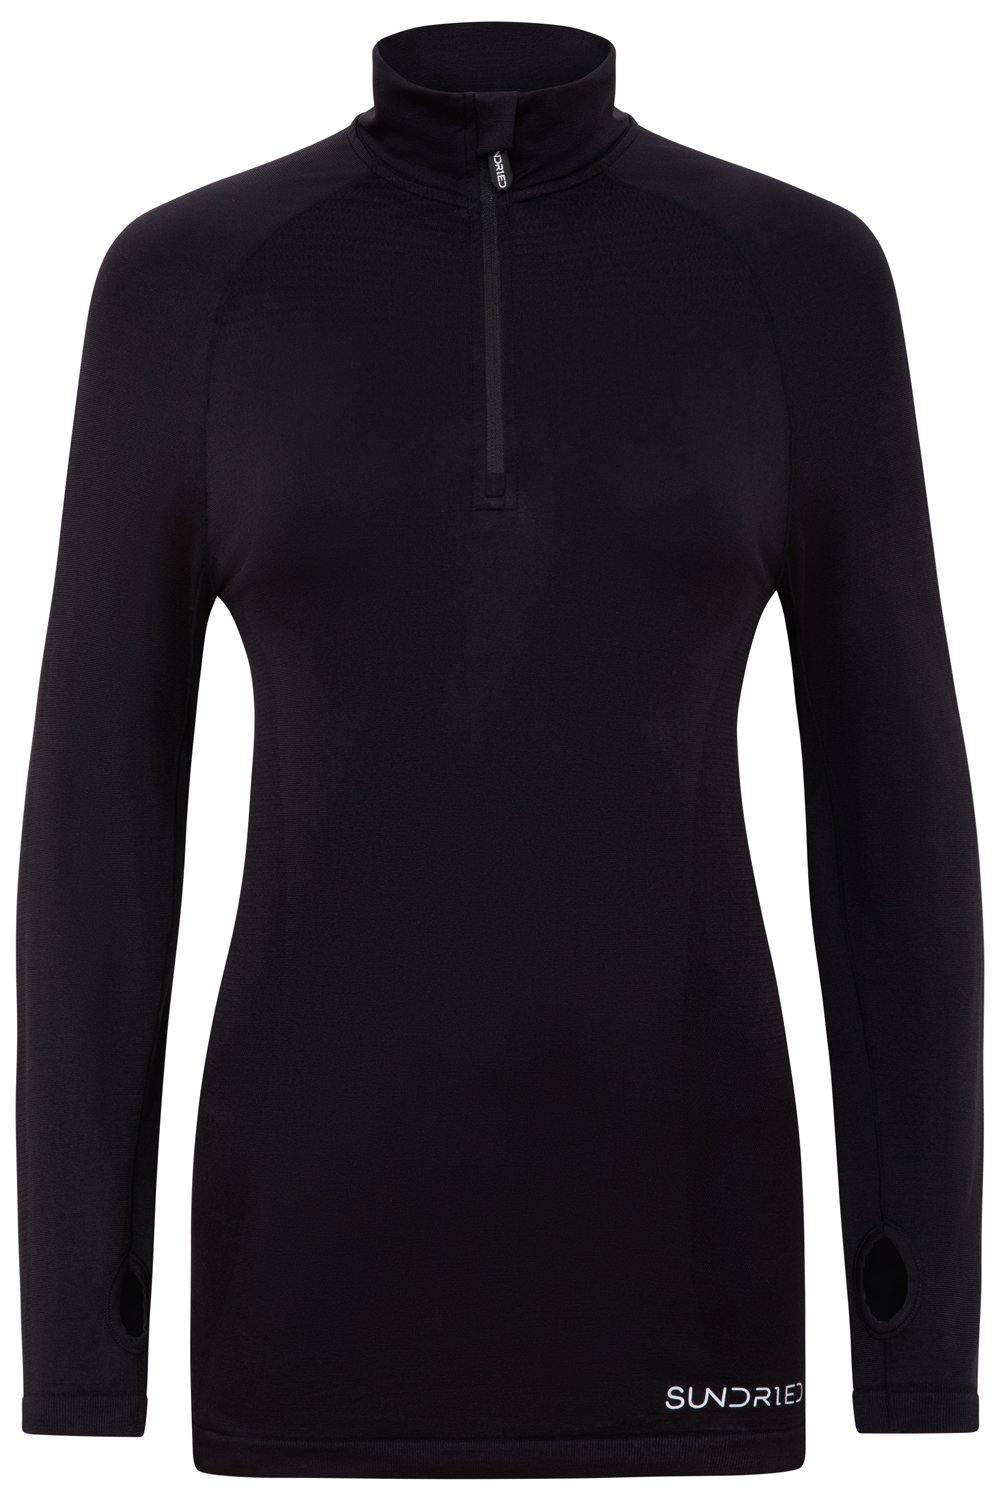 Sundried Threshold Women's Half Zip Jacket Sweatshirt XL Black SD0161 XL Black Activewear